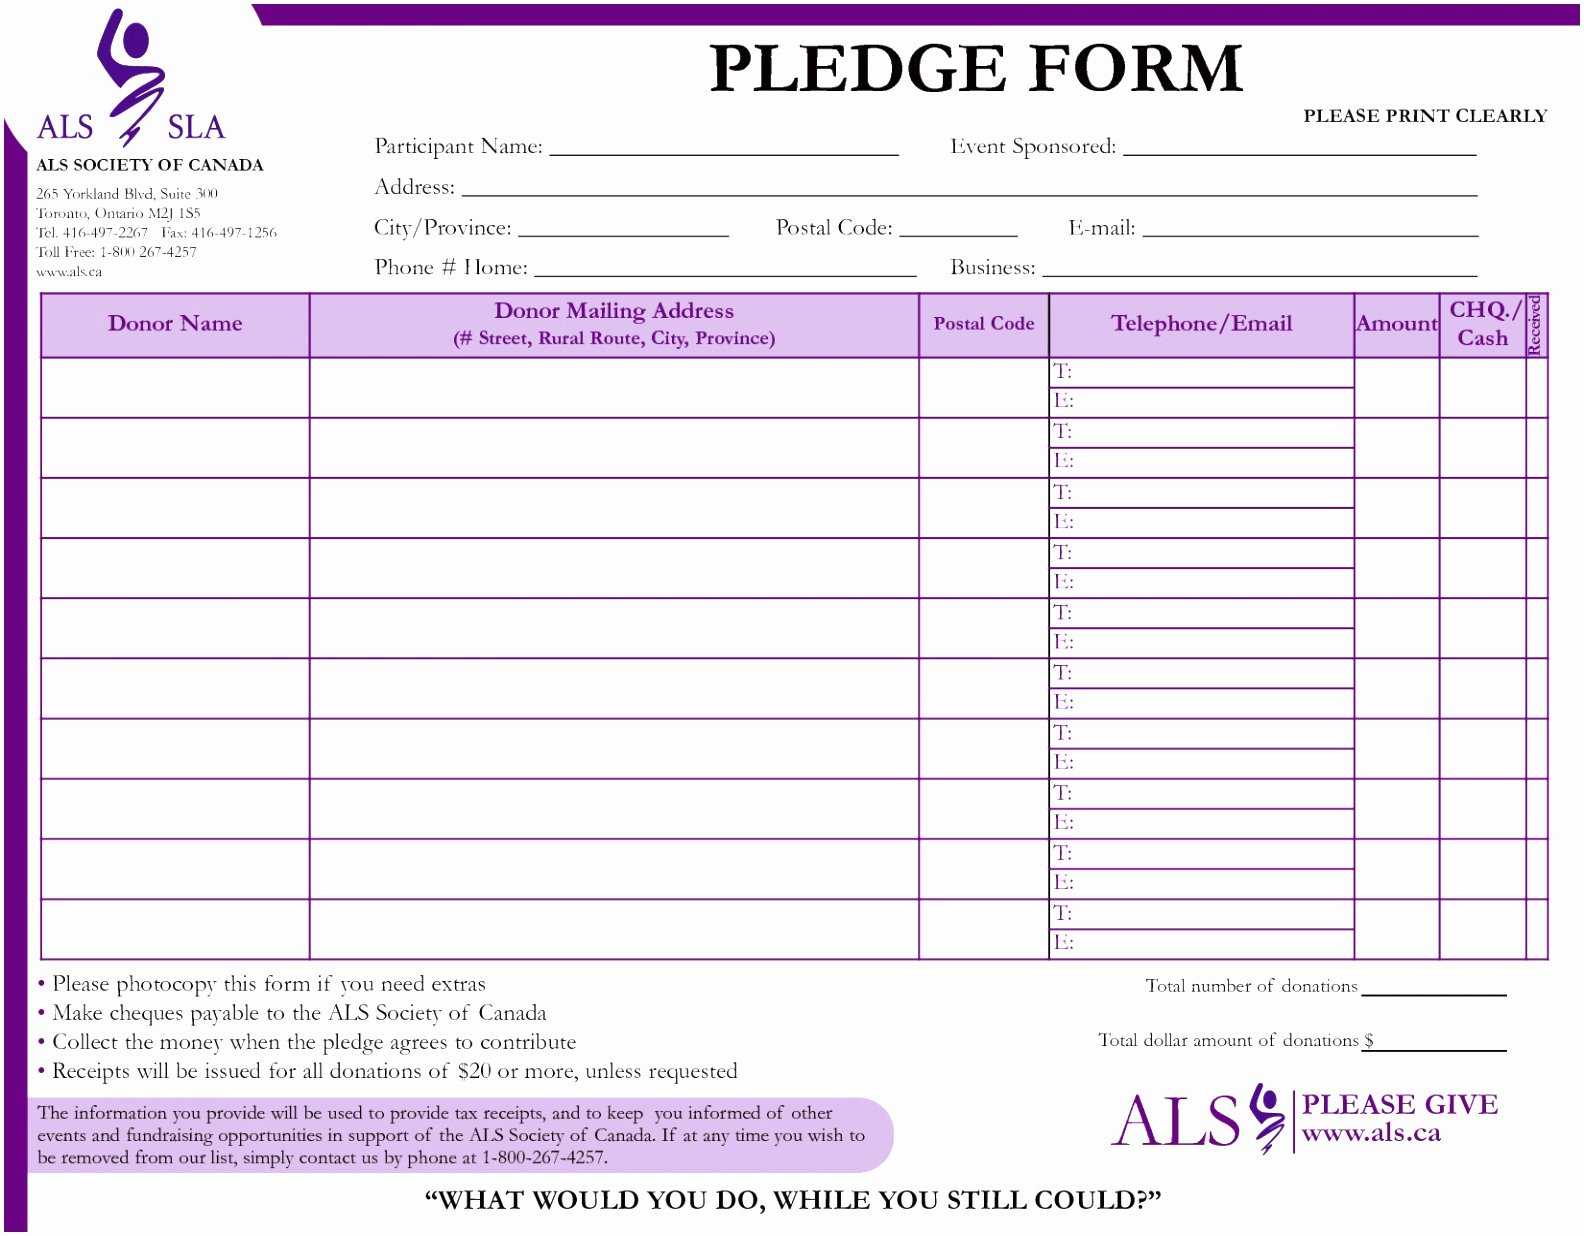 039 Pledge Card Template Word Best Of Fundraiser Form Pttyt Regarding Free Pledge Card Template